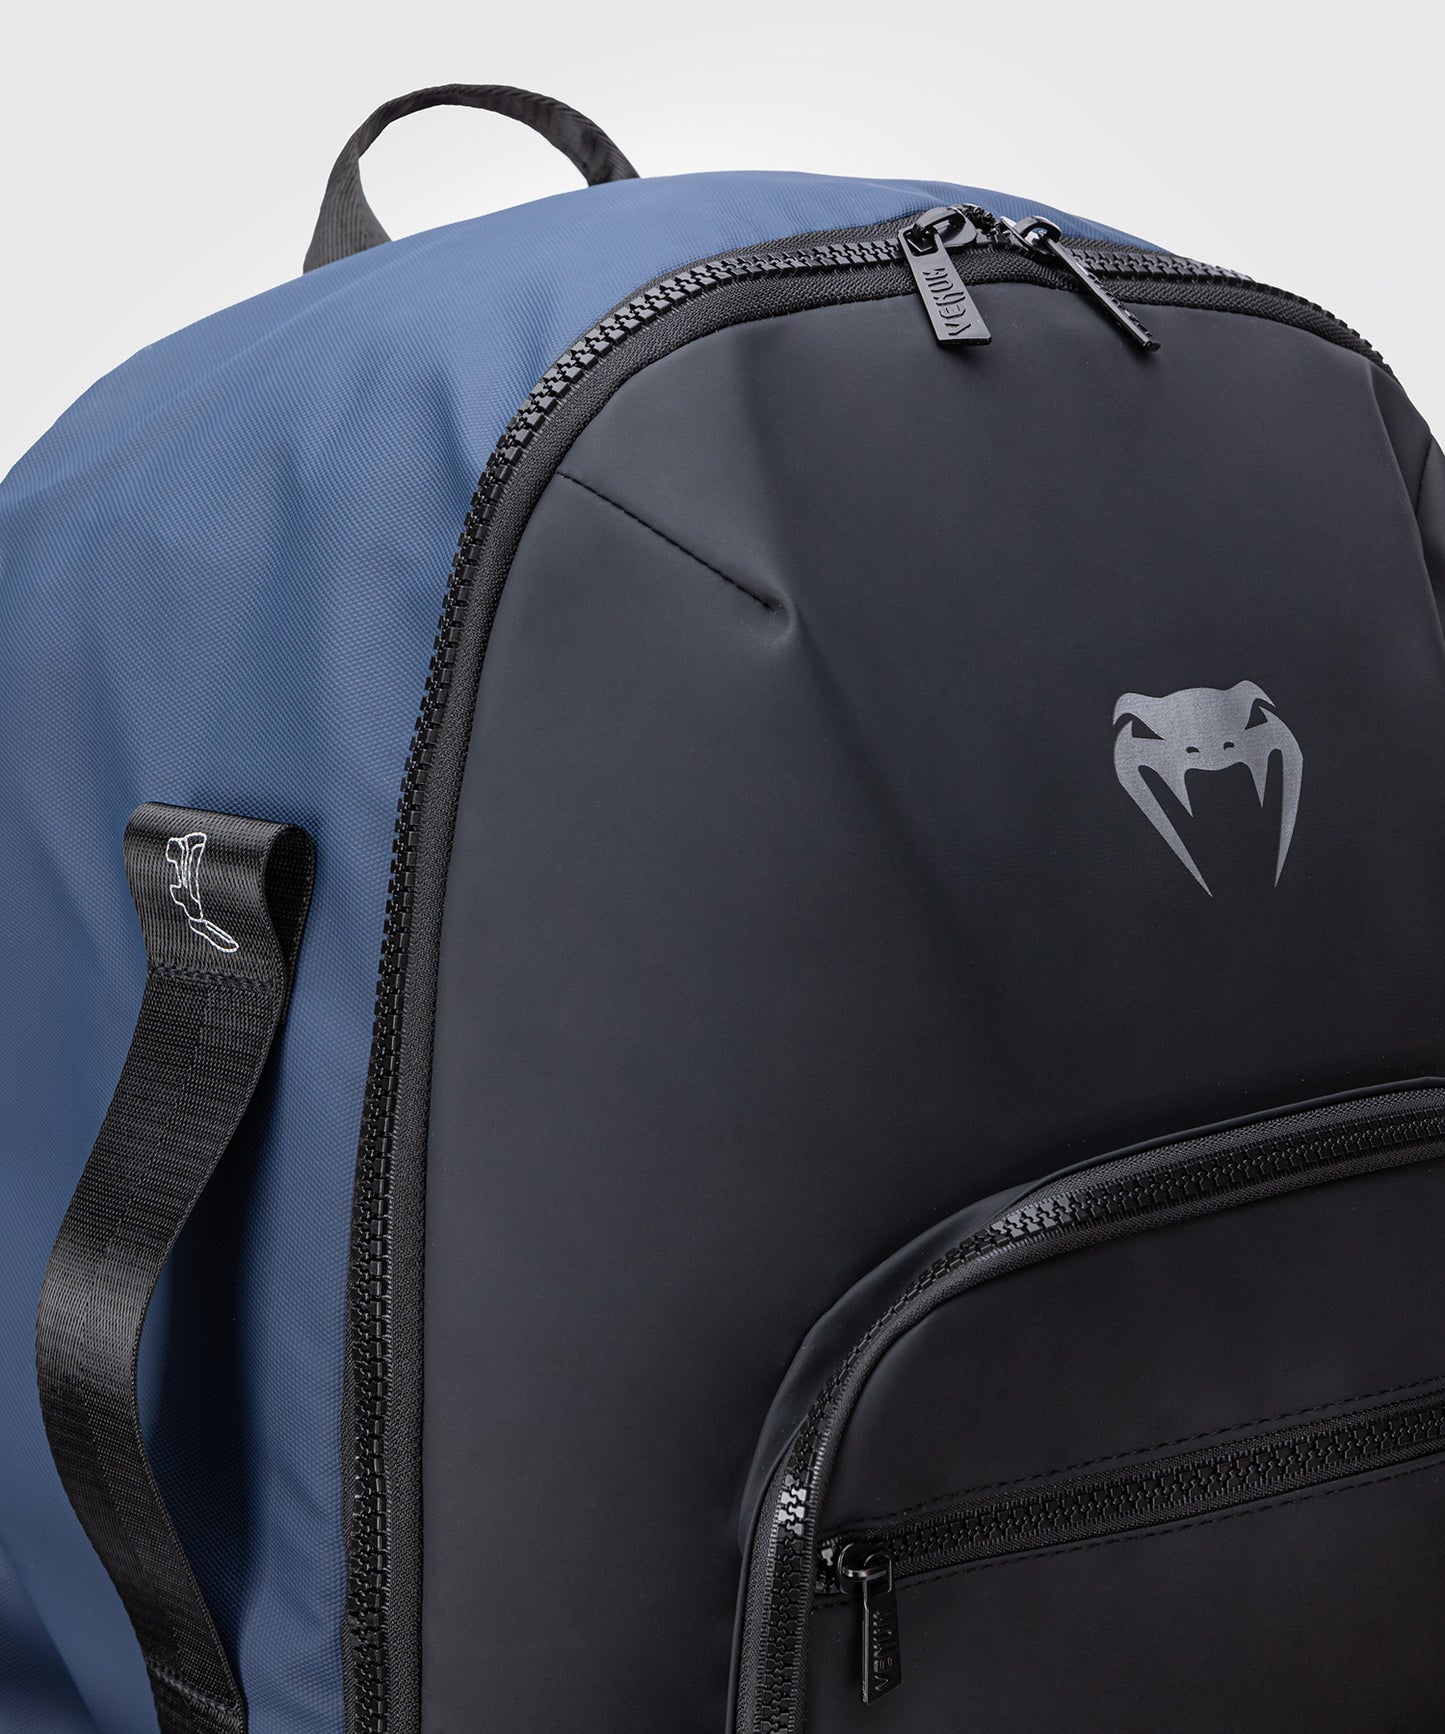 Venum Evo 2 Xtrem Backpack - Black/Blue